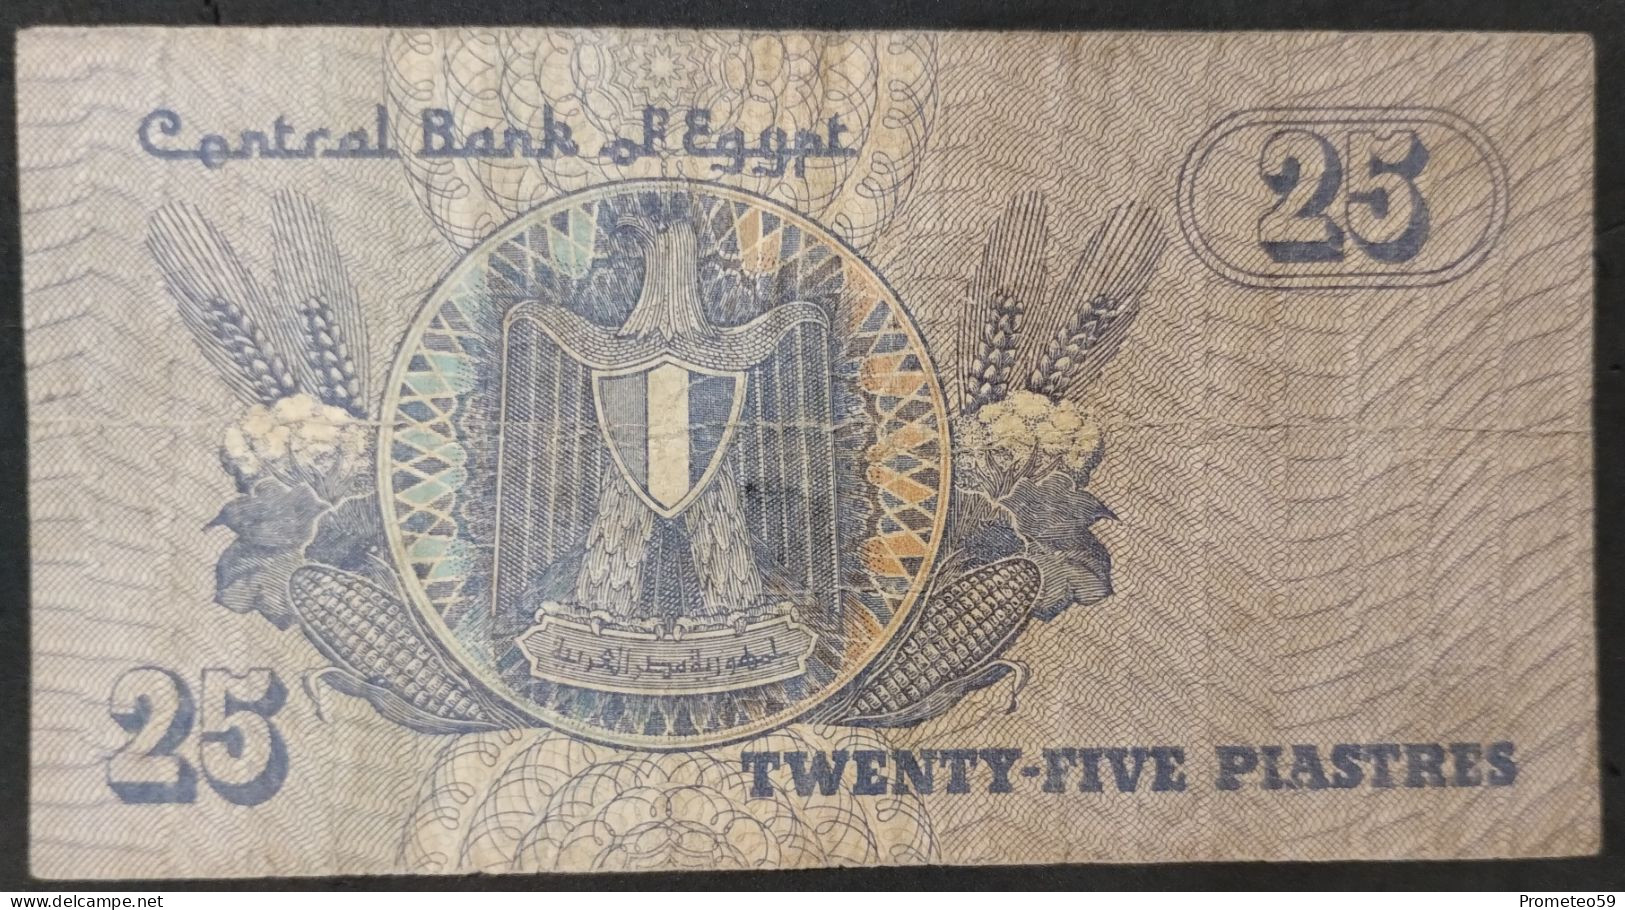 Egipto – Billete Banknote De 25 Piastres – 1985/2007 - Egypt